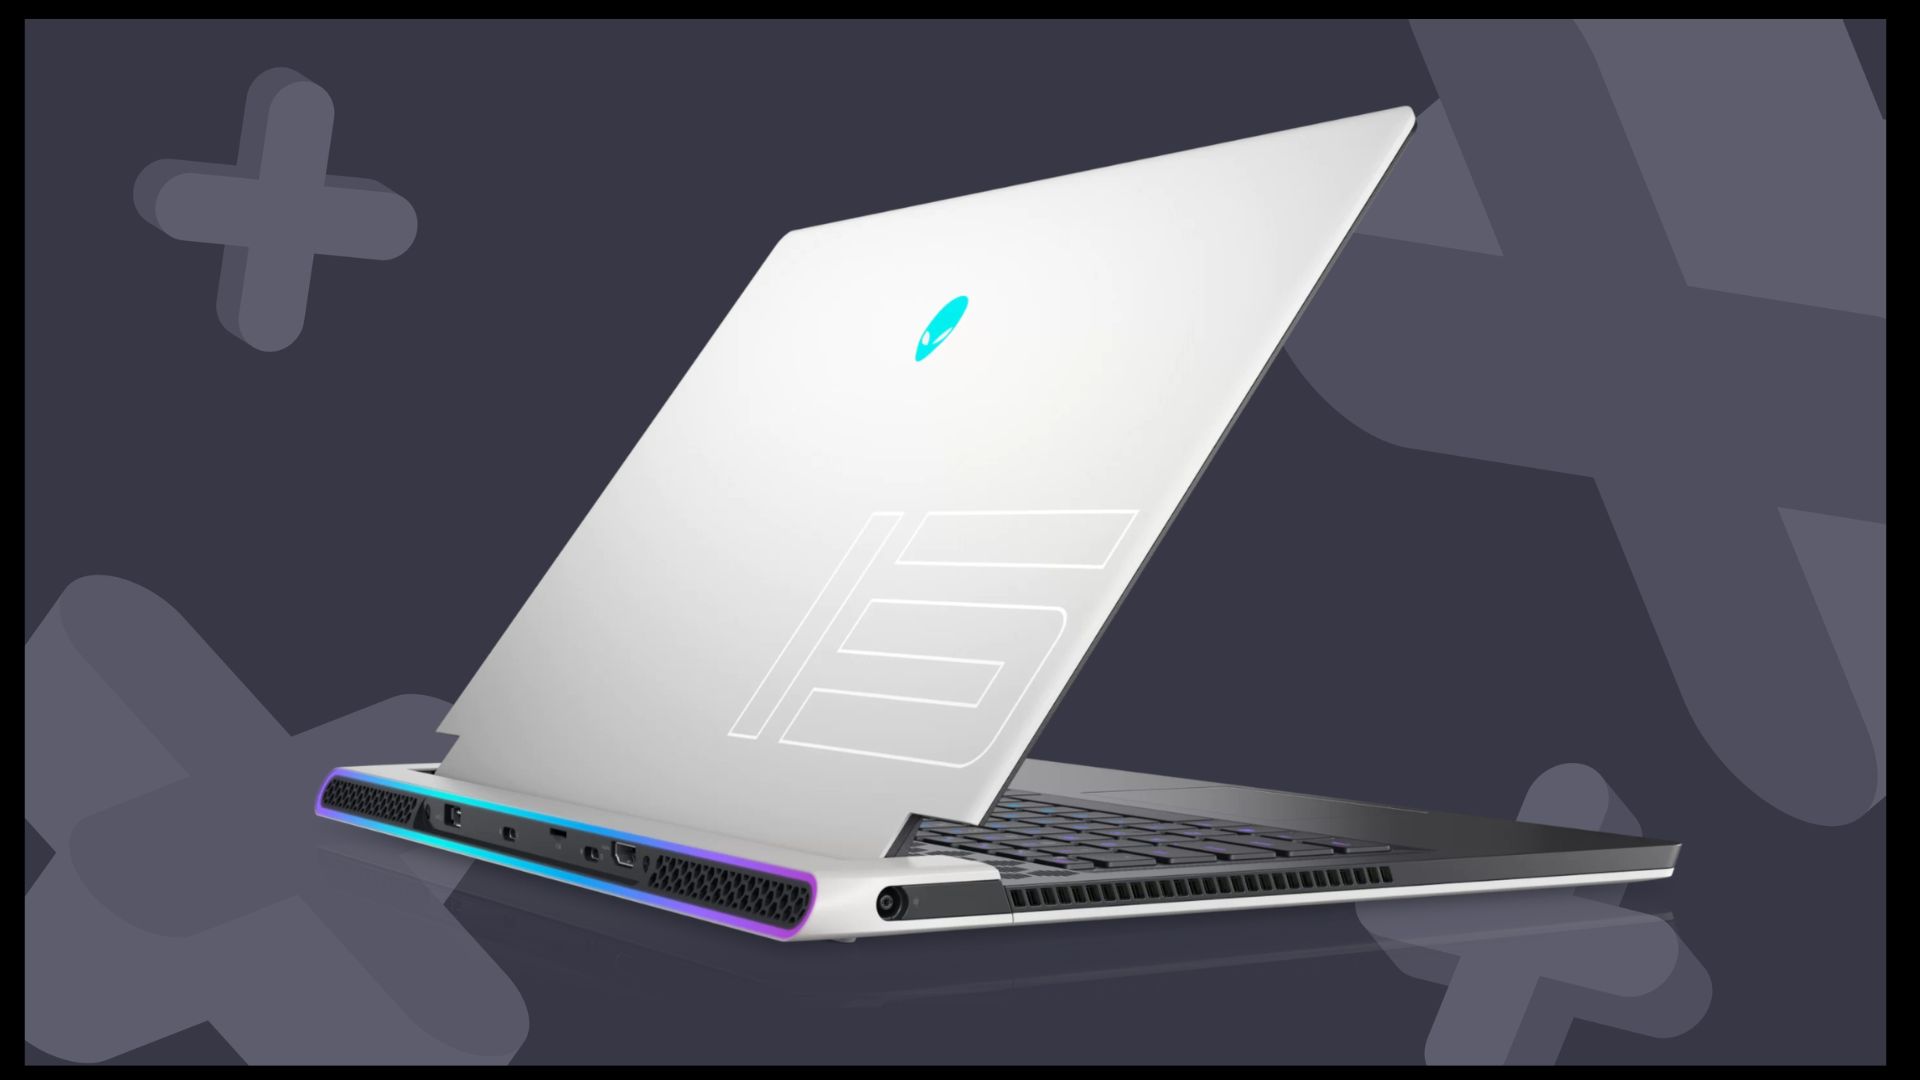 Alienware Laptop Cyber Monday: Get the Best Deals